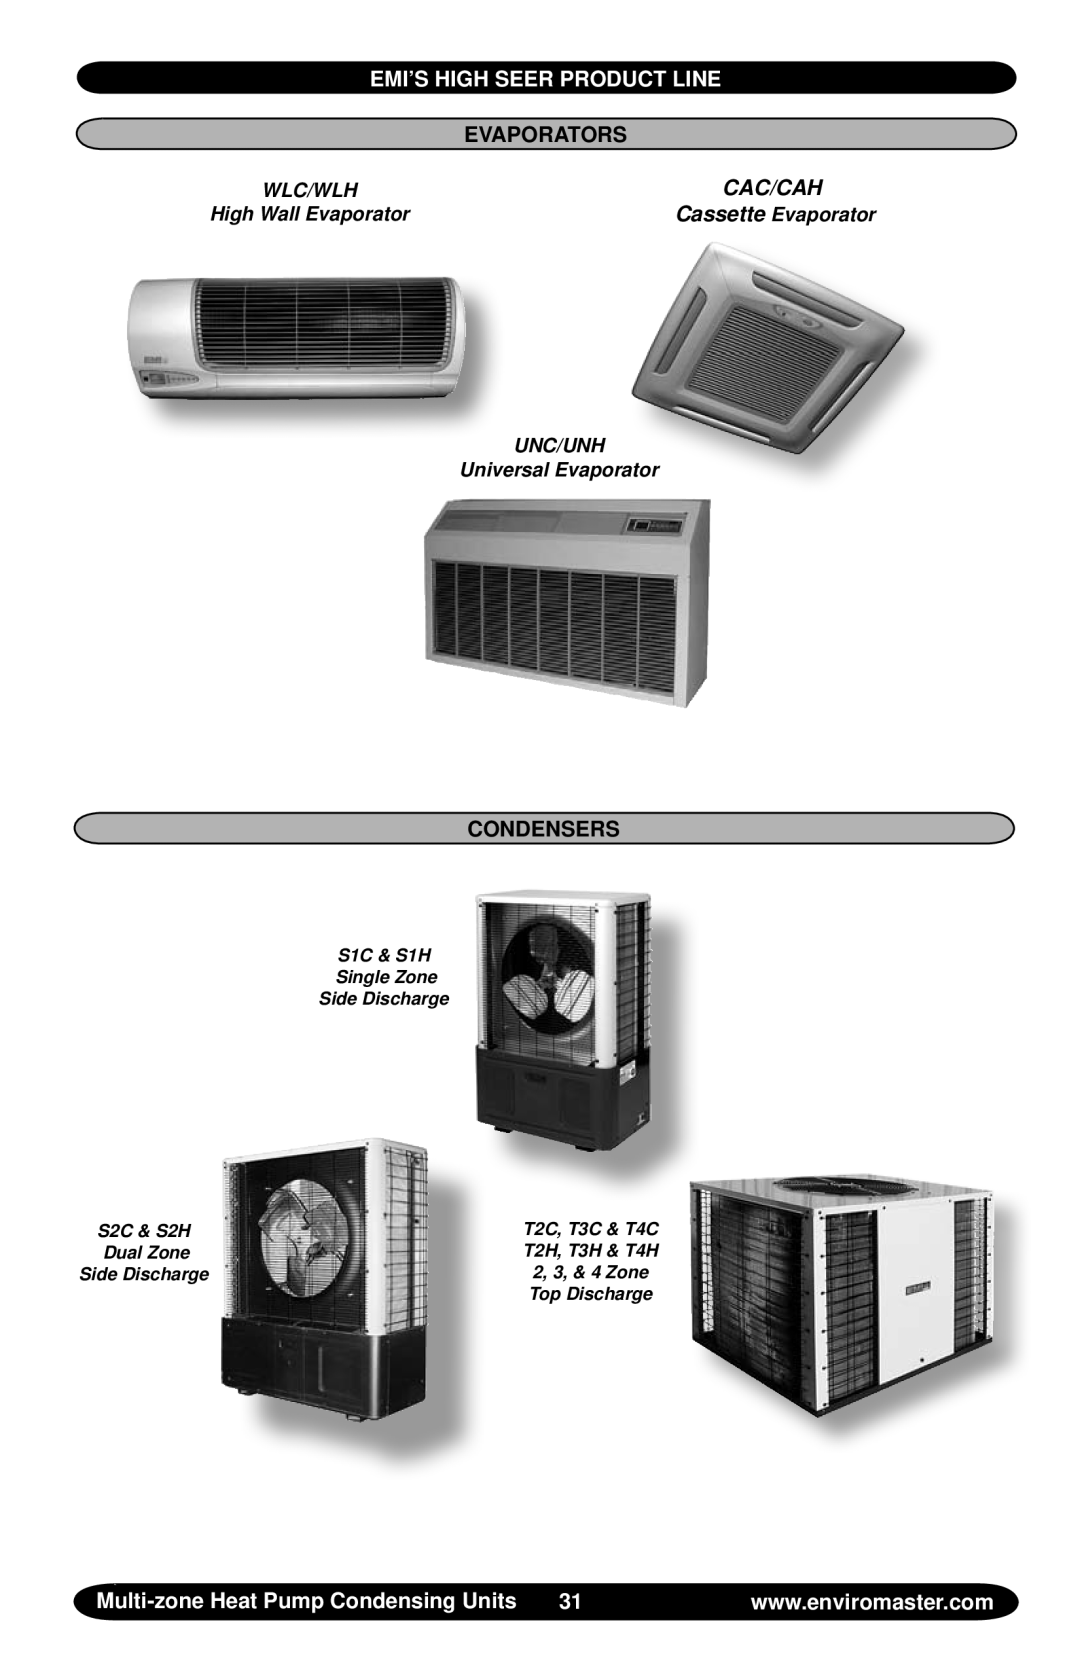 EMI S2HB EMI’s High SEER Product Line, Evaporators, Condensers, High Wall Evaporator, Cassette Evaporator, Top Discharge 